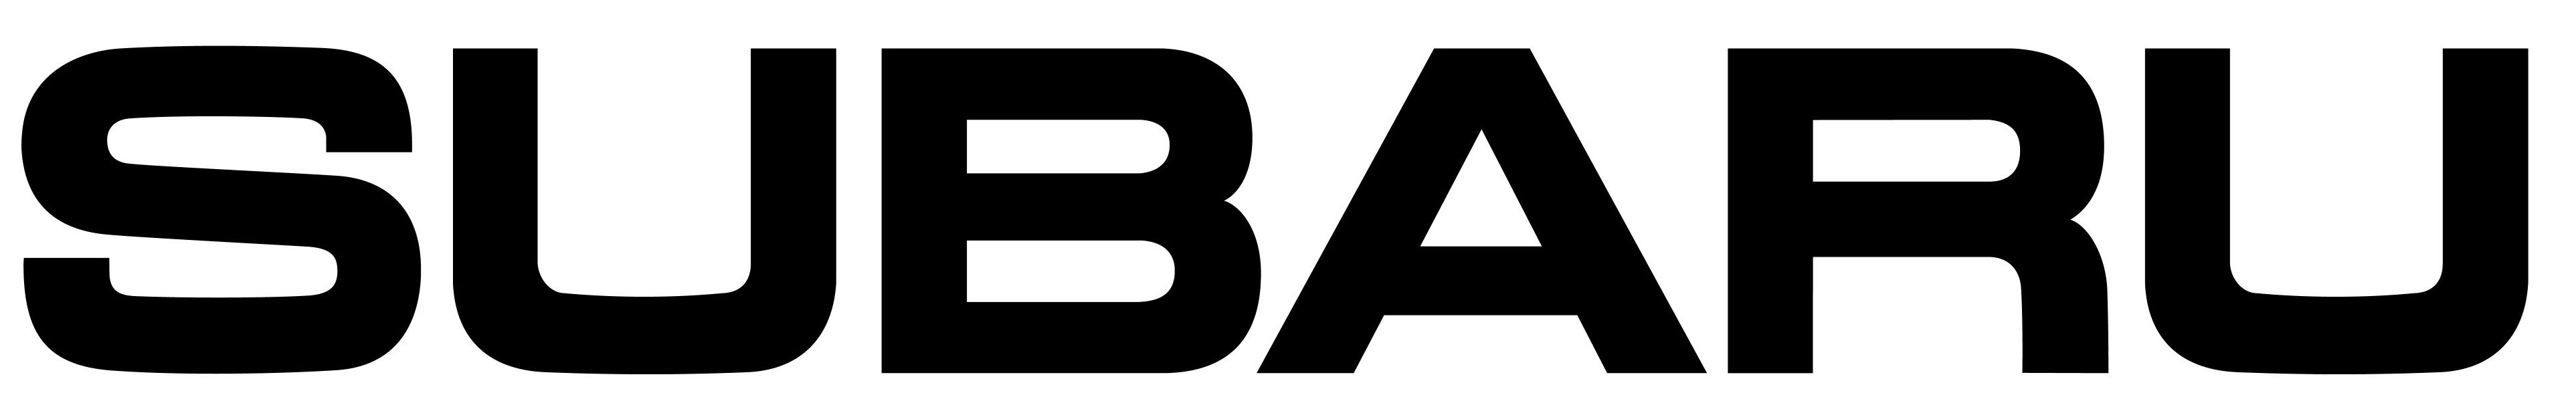 Subaru-logo-black-and-white.png